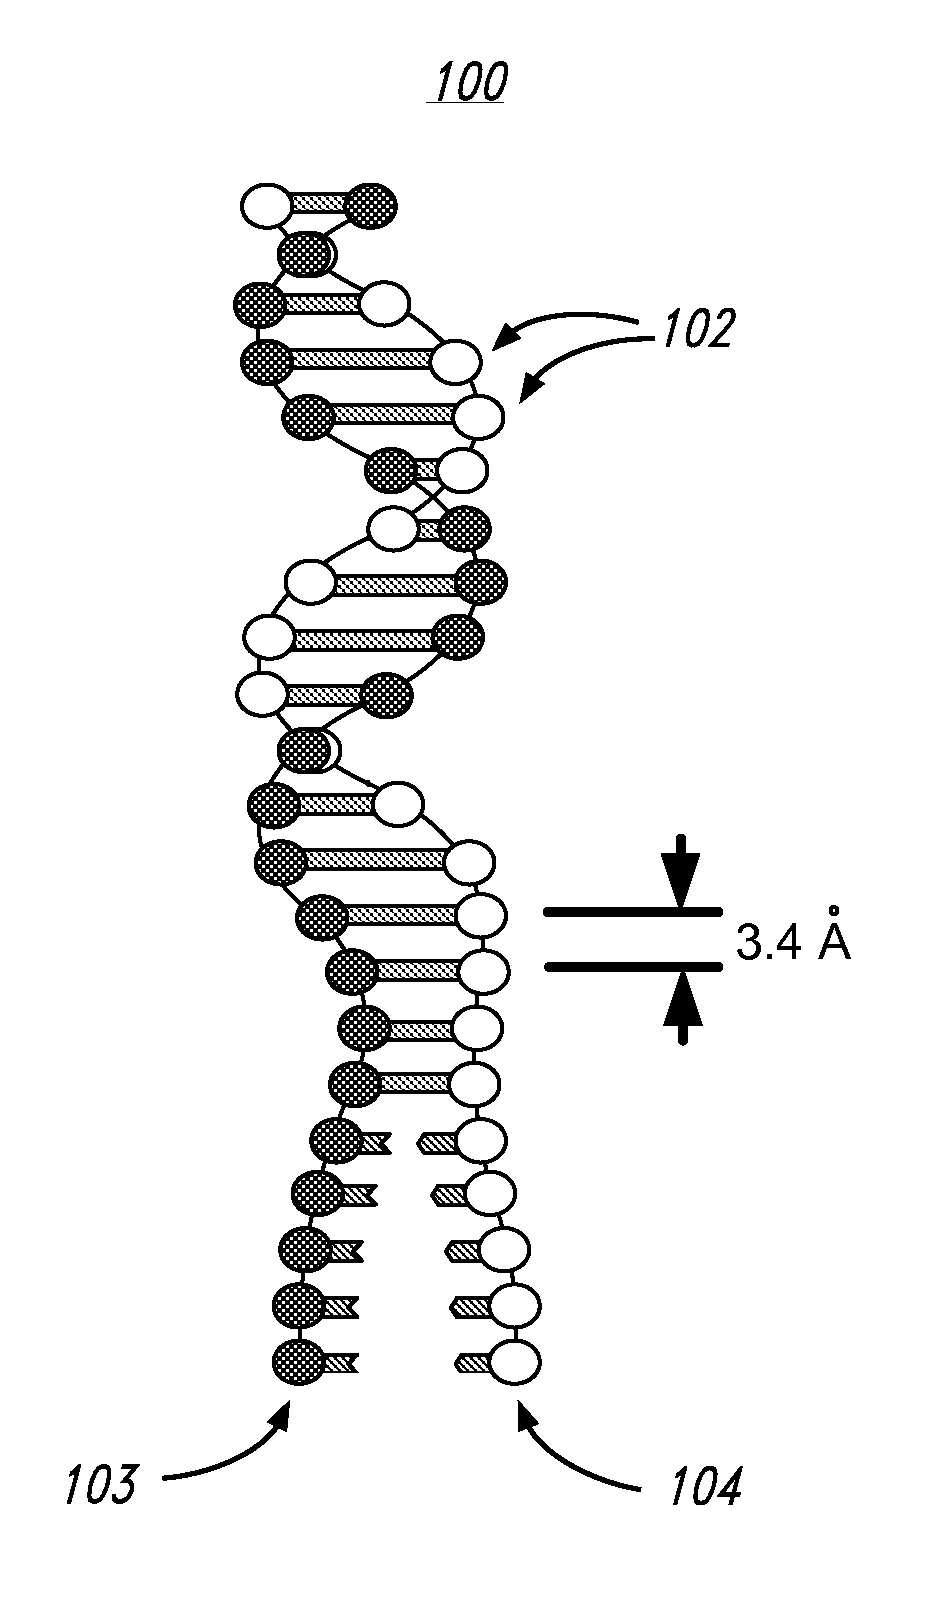 High throughput nucleic acid sequencing by spacing